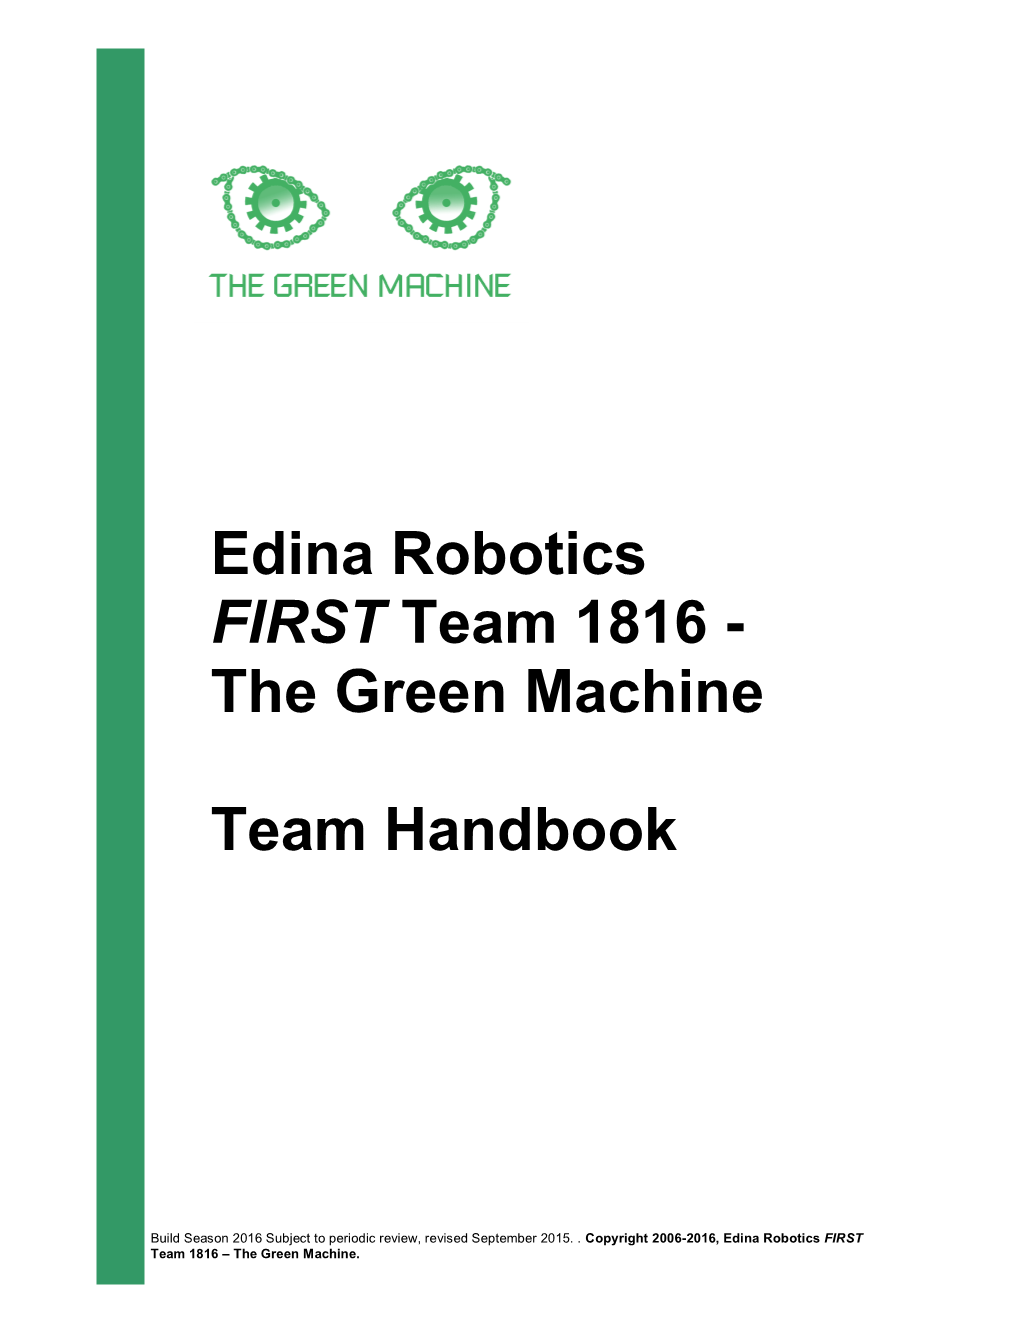 Team Handbook Example